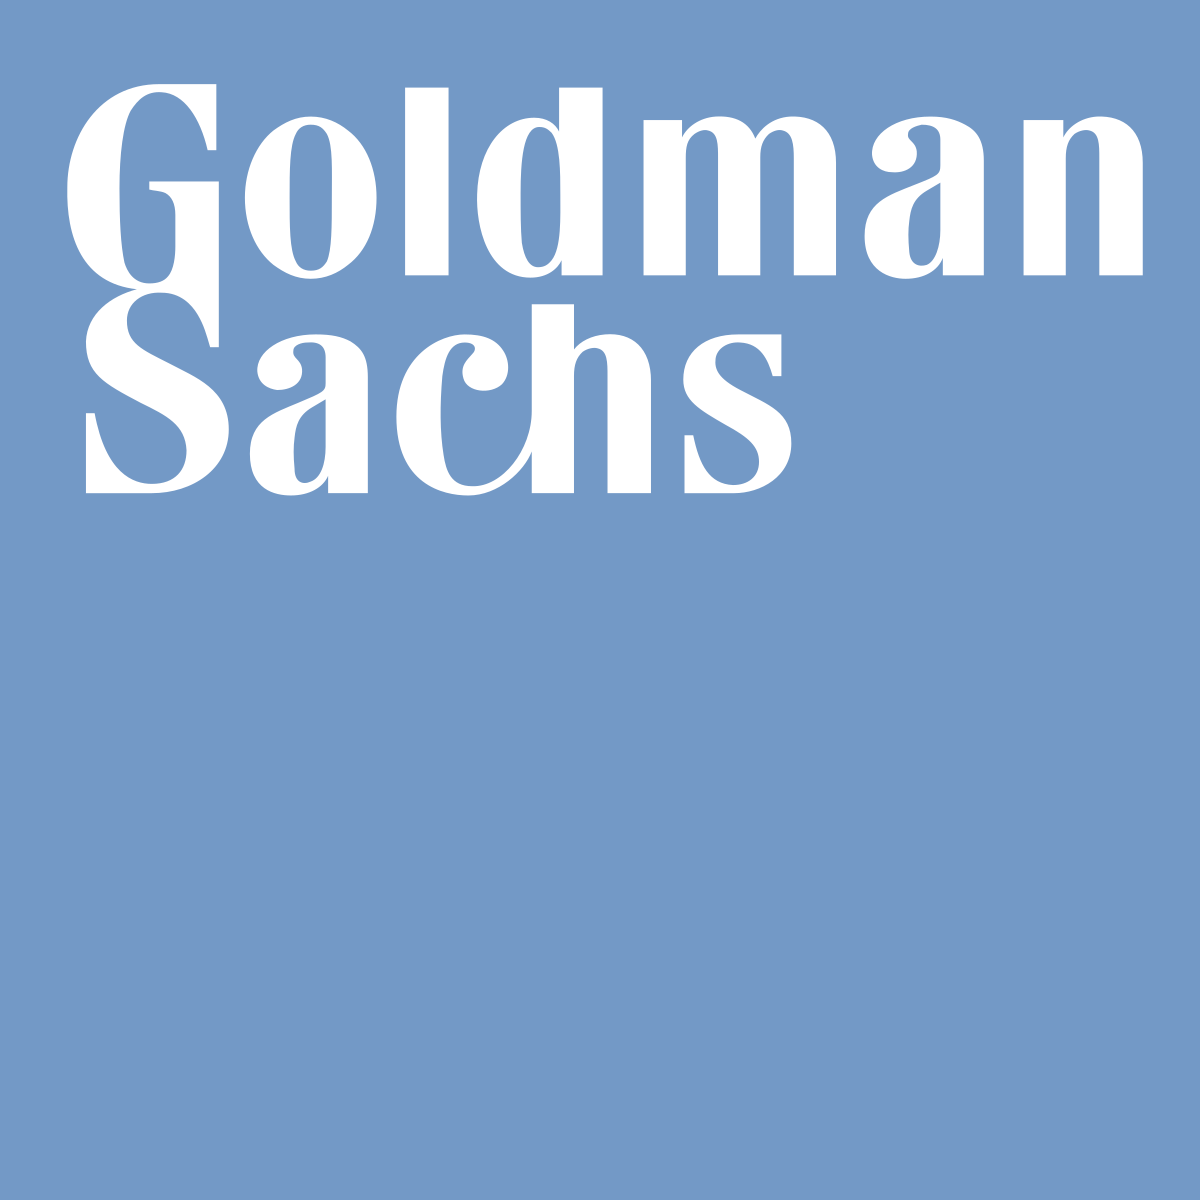 Display Image of Goldman Sachs Asset Management